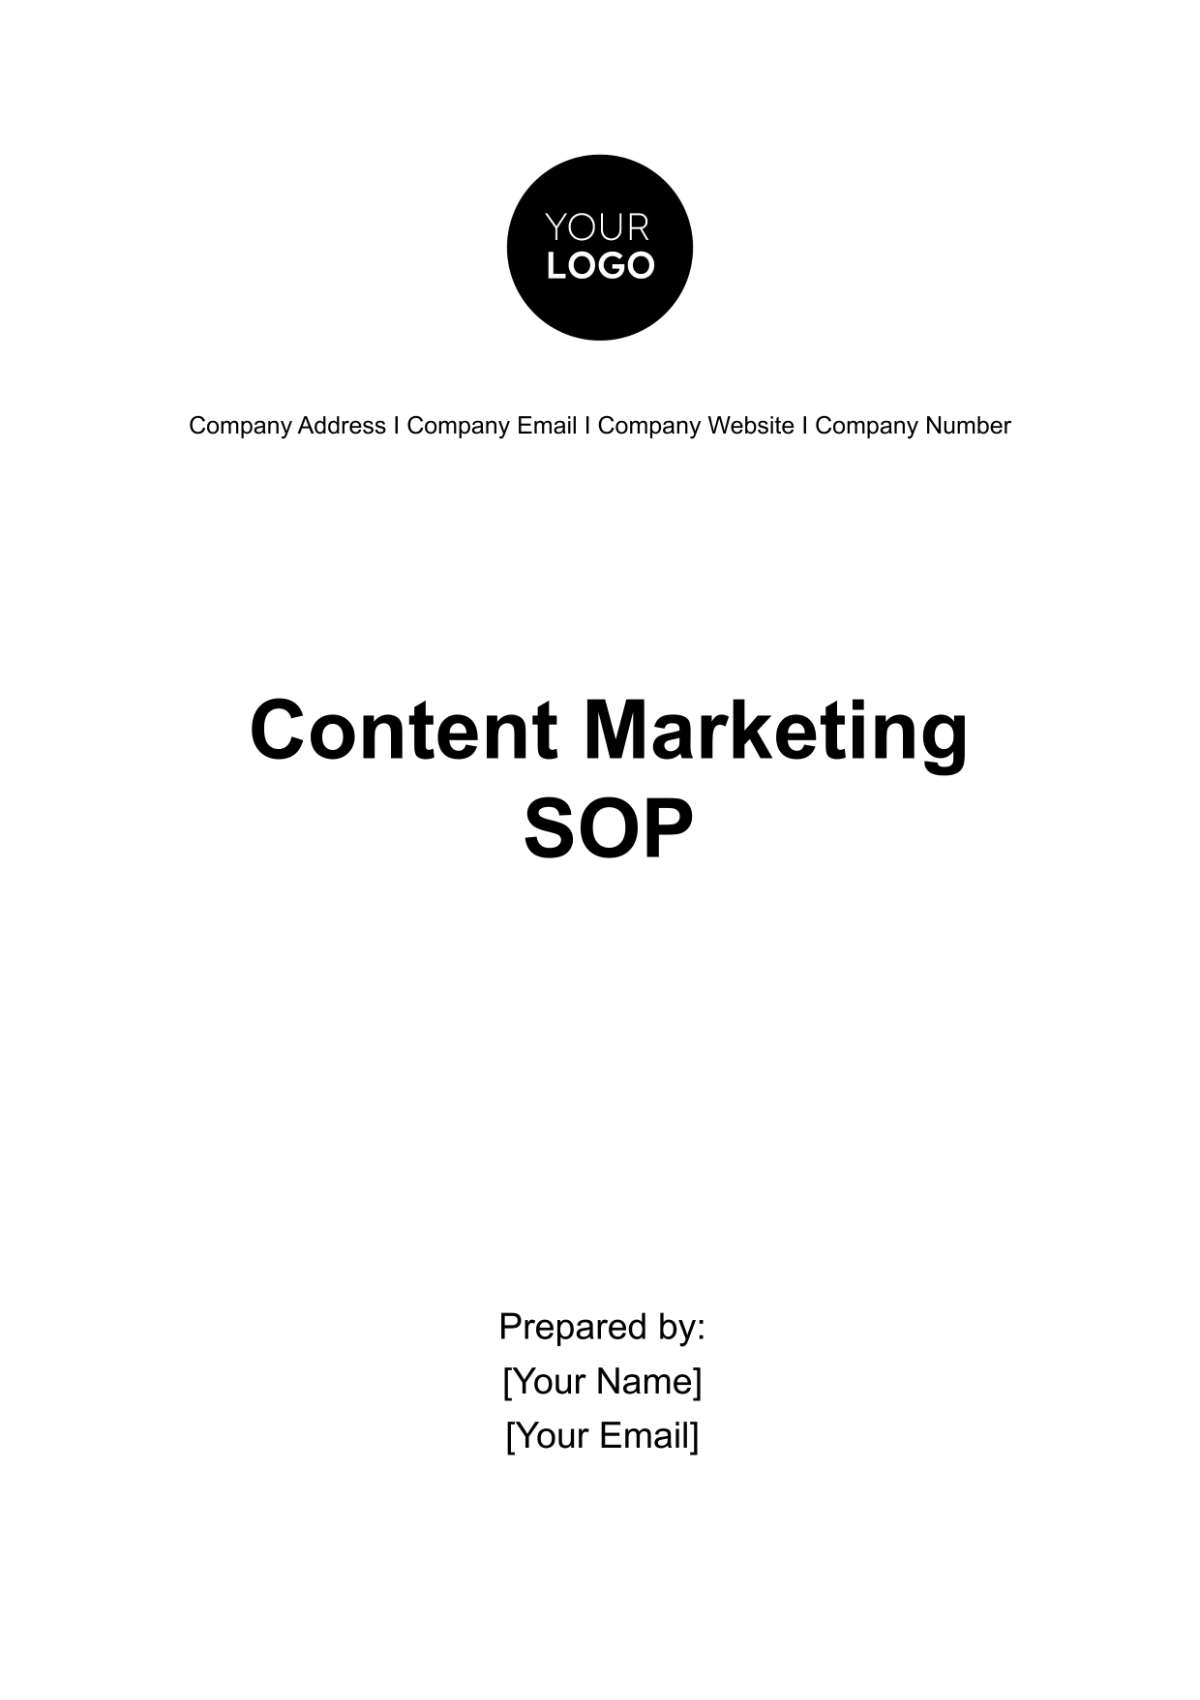 Content Marketing SOP Template